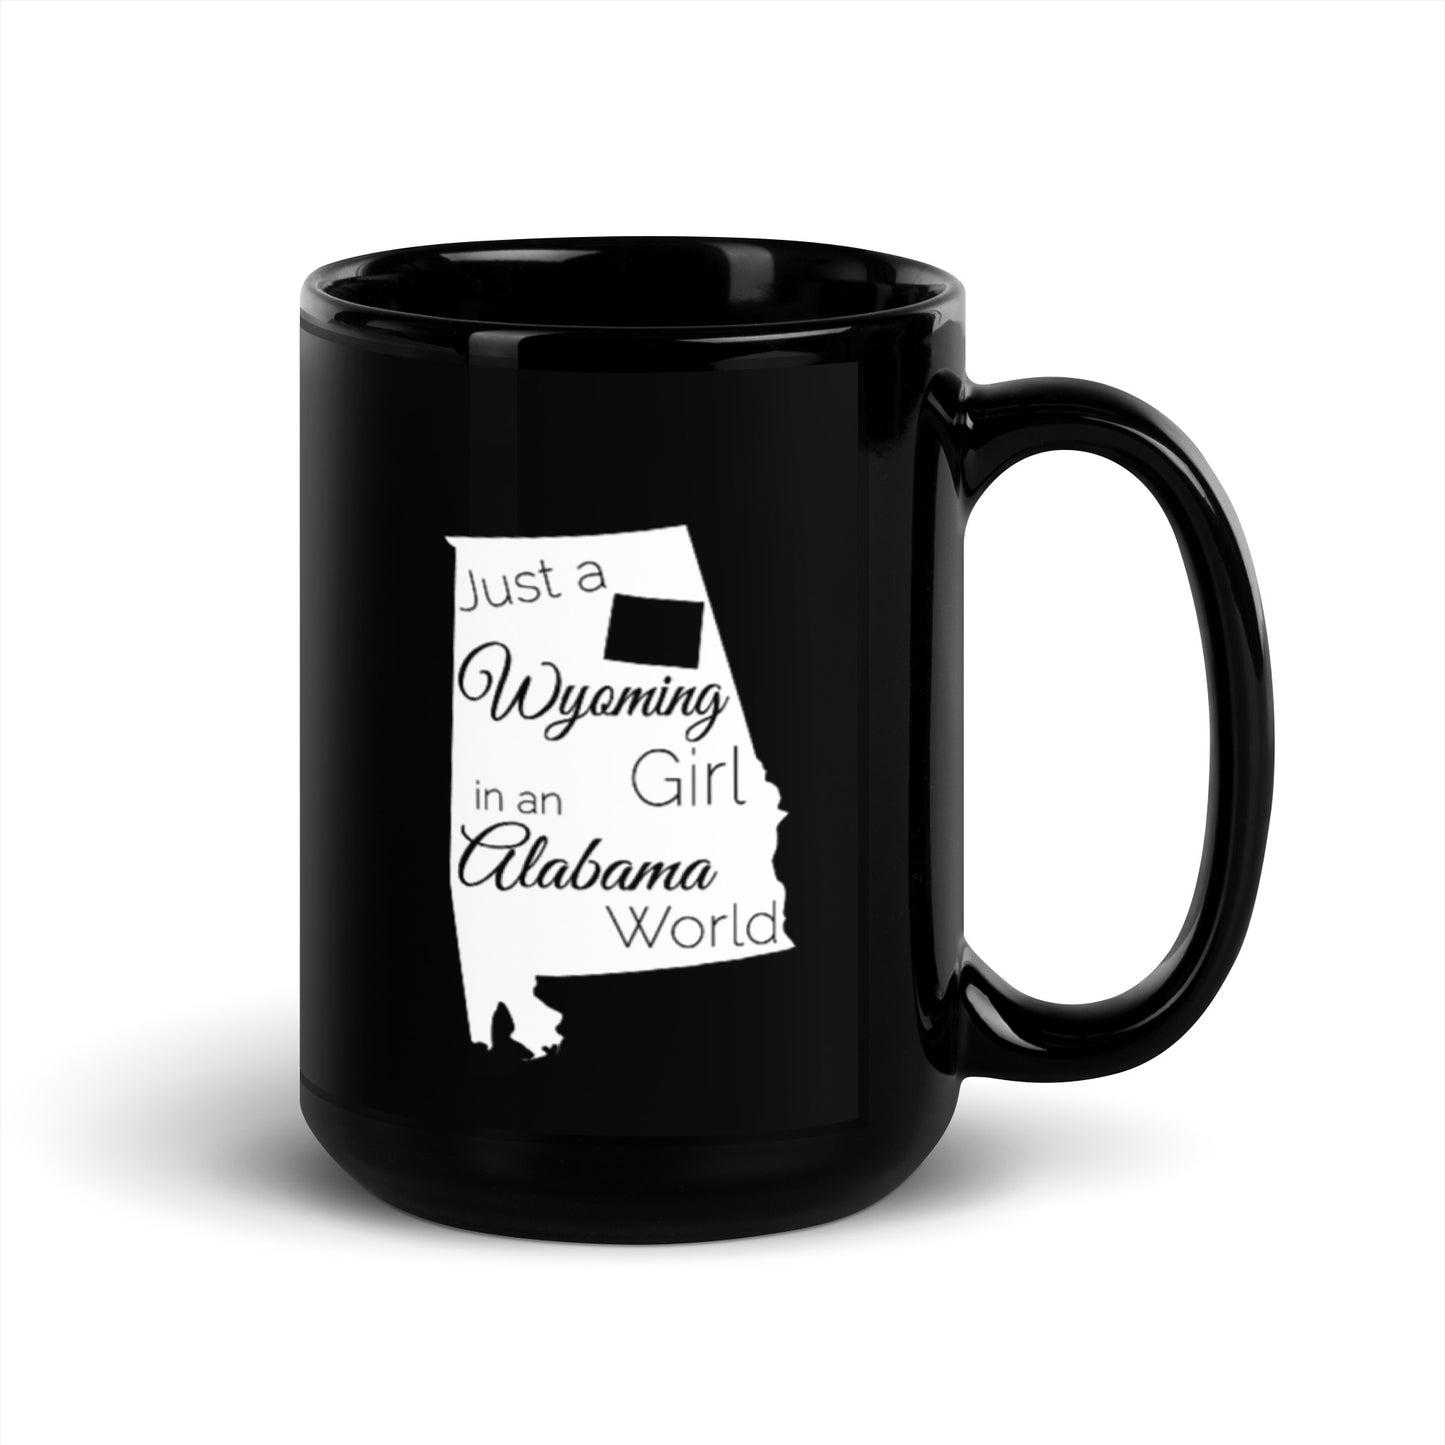 Just a Wyoming Girl in an Alabama World Black Glossy Mug